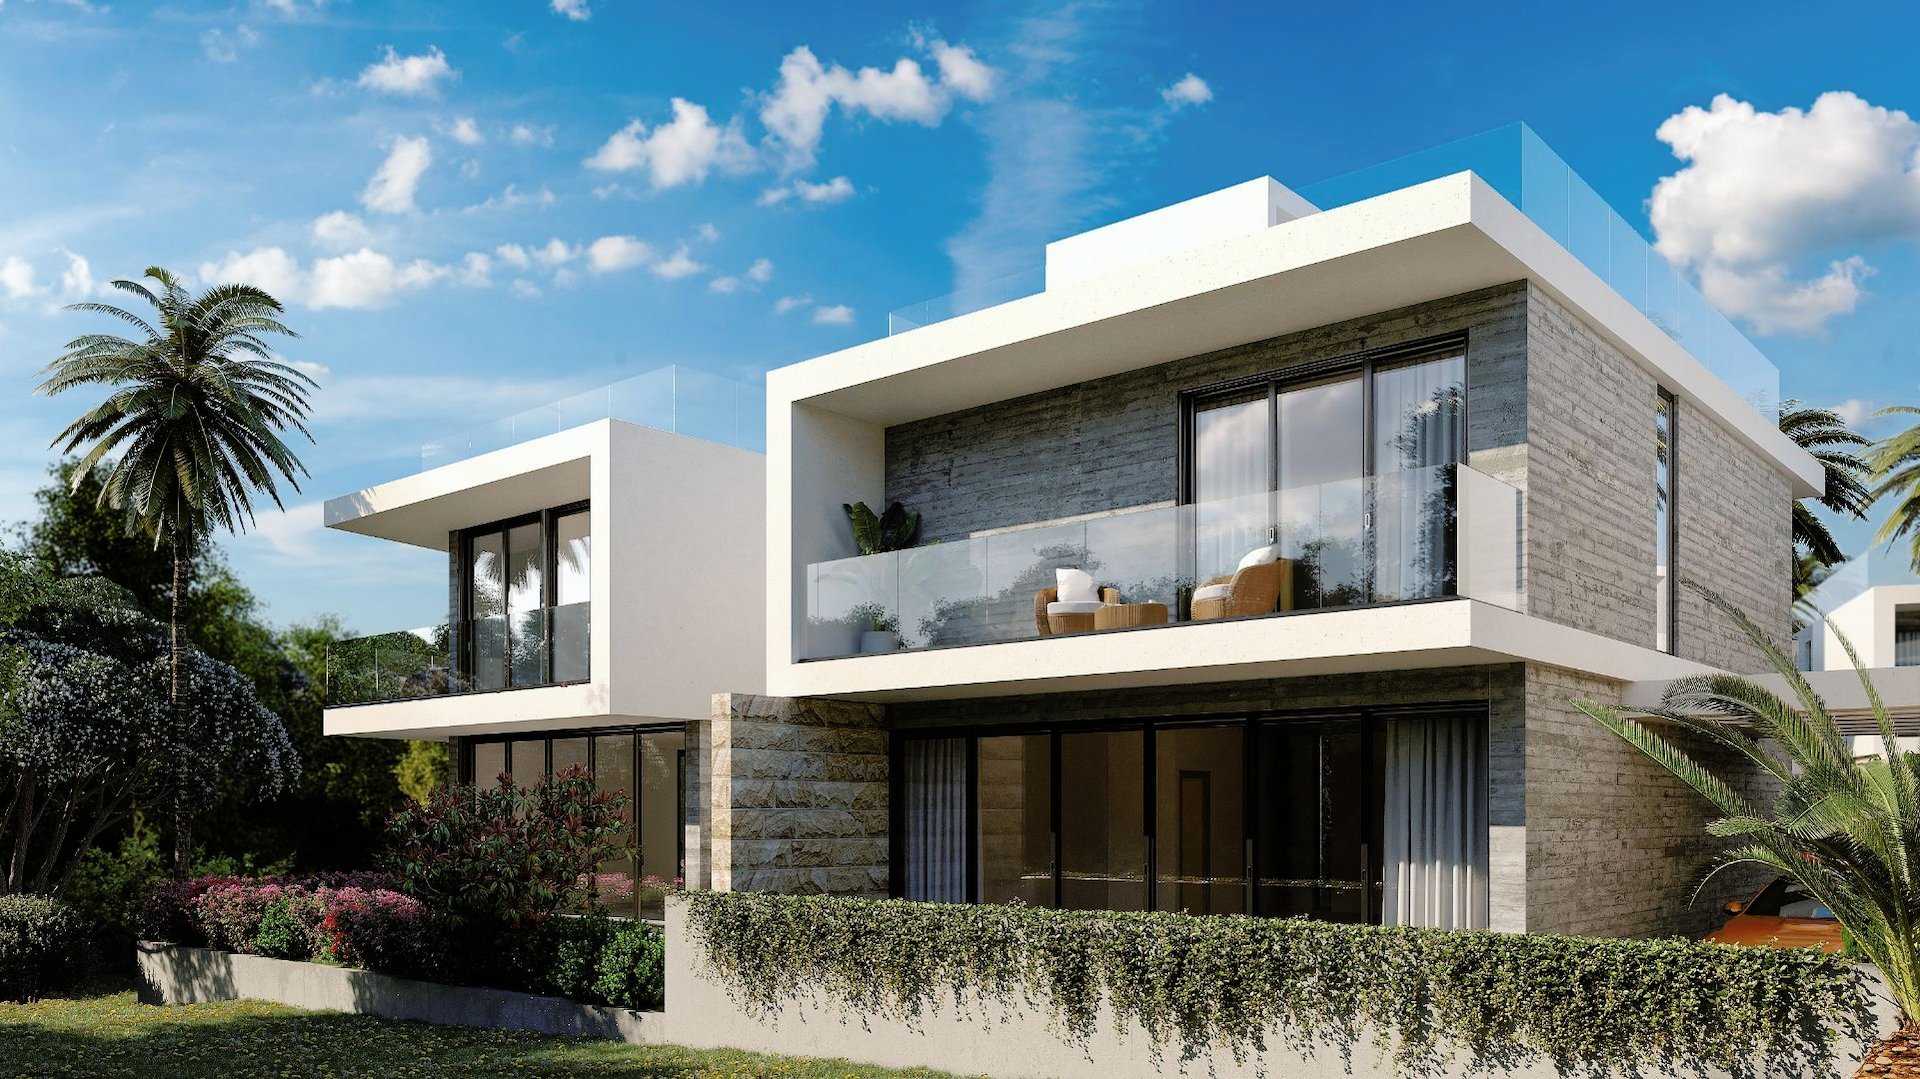 3 Bedroom Villa for Sale in Mesogi, Paphos District